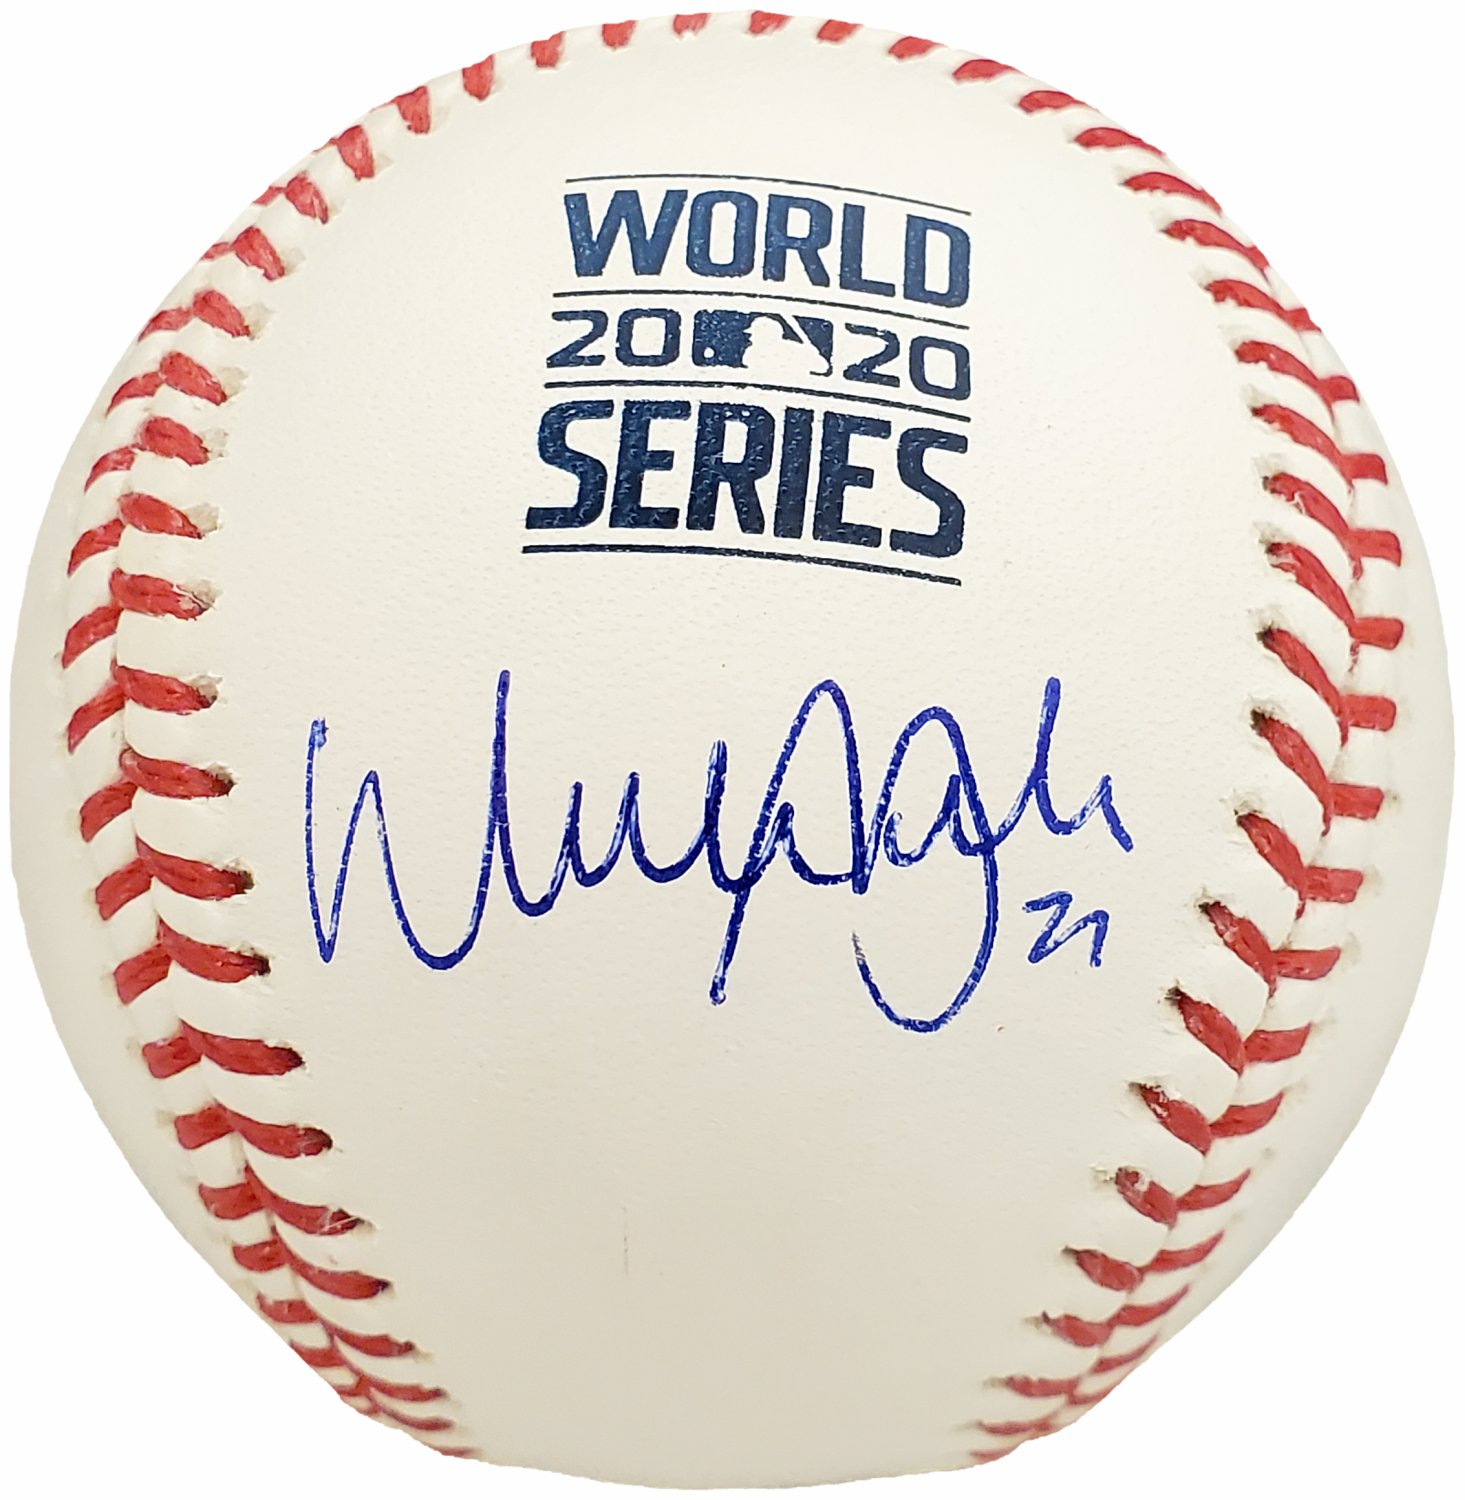 Walker Buehler Authentic Autographed Los Angeles Dodgers Jersey